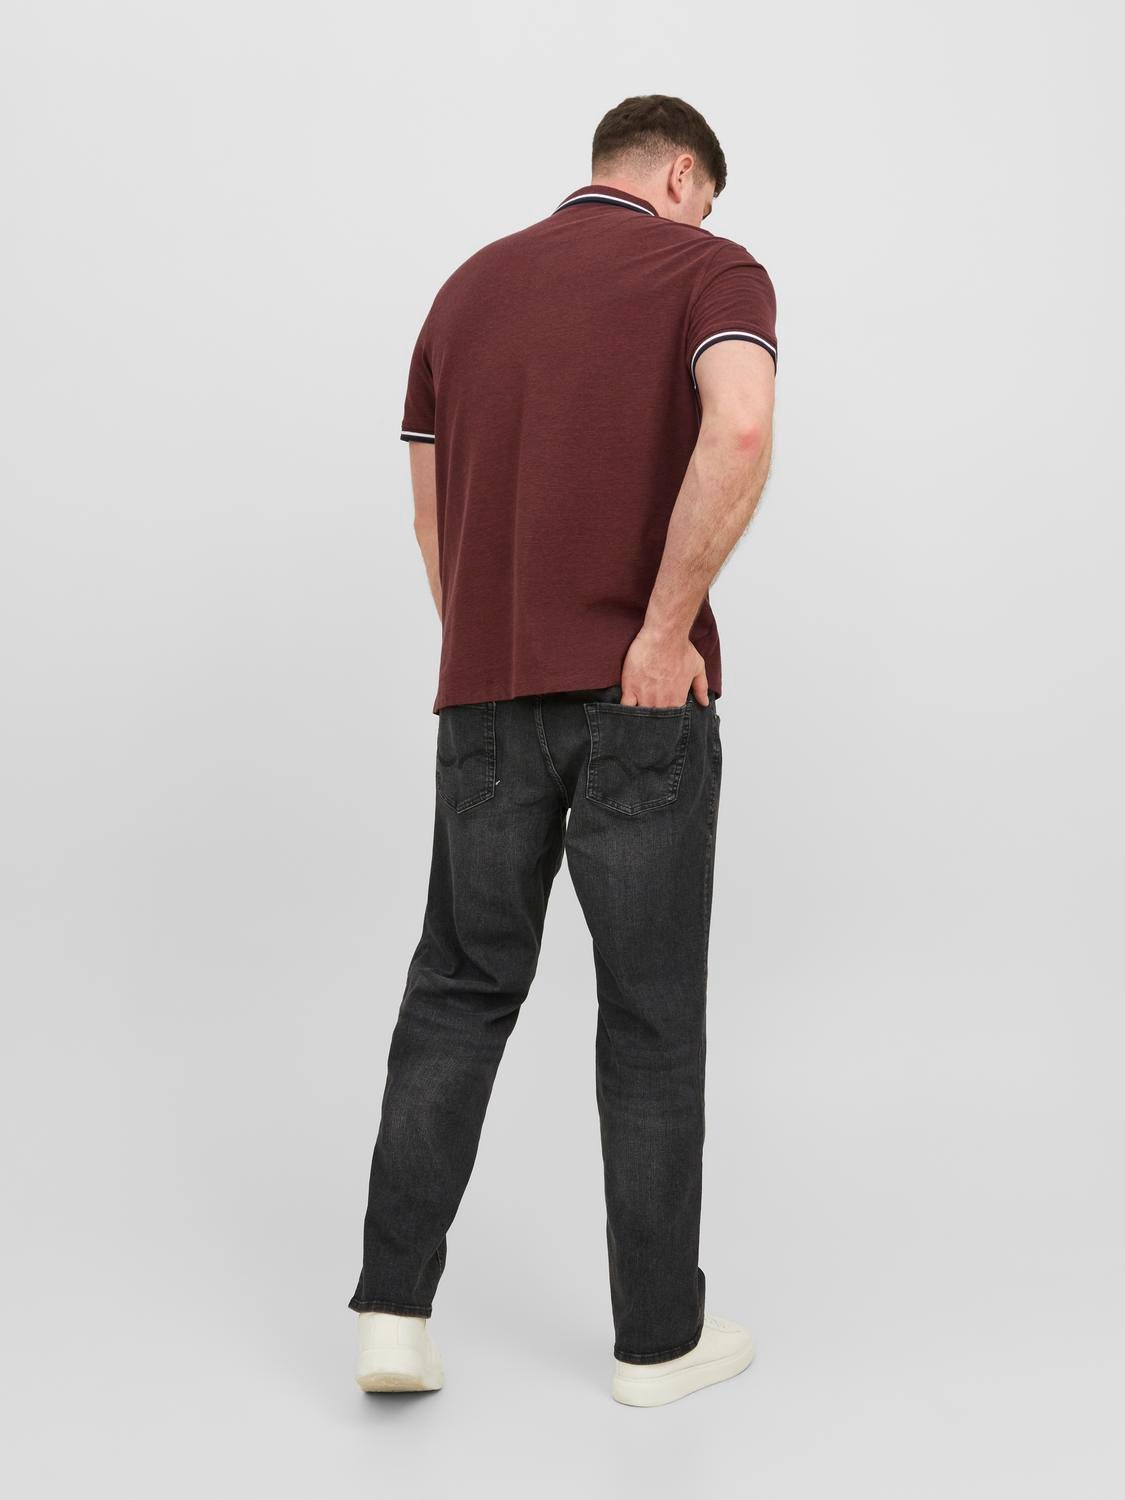 Jack & Jones Plus Size T-shirt Semplice -Cinnabar - 12143859